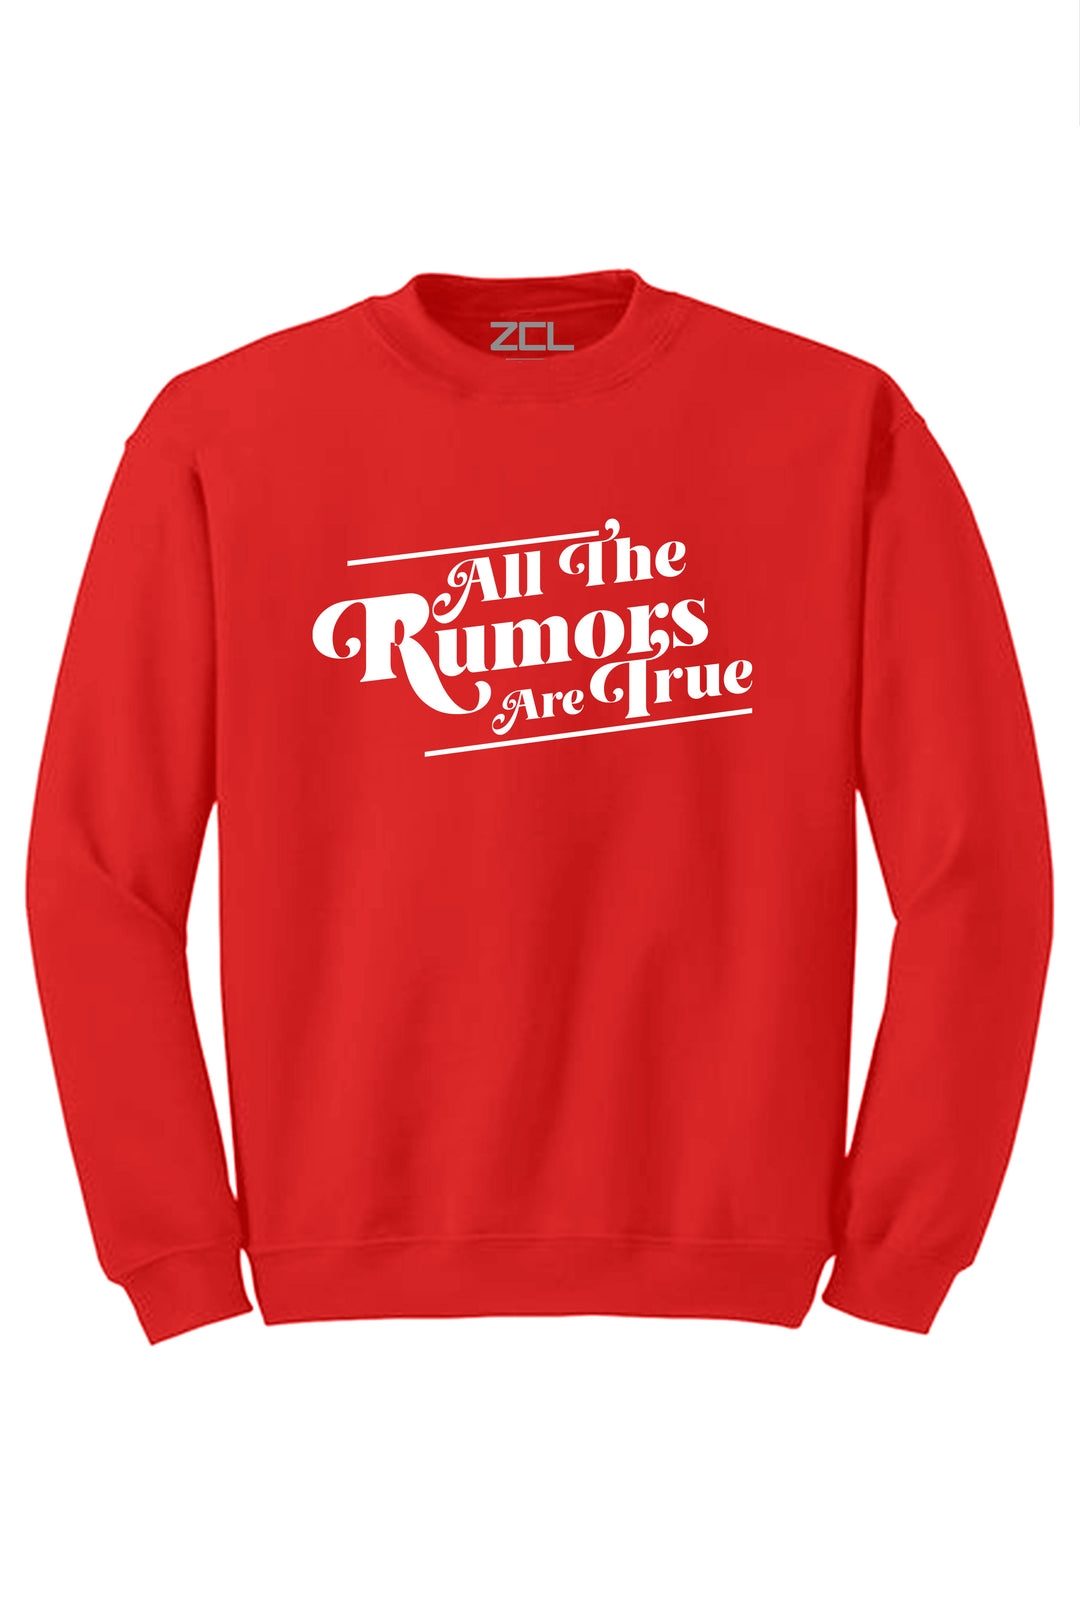 Rumors Crewneck Sweatshirt (White Logo) - Zamage